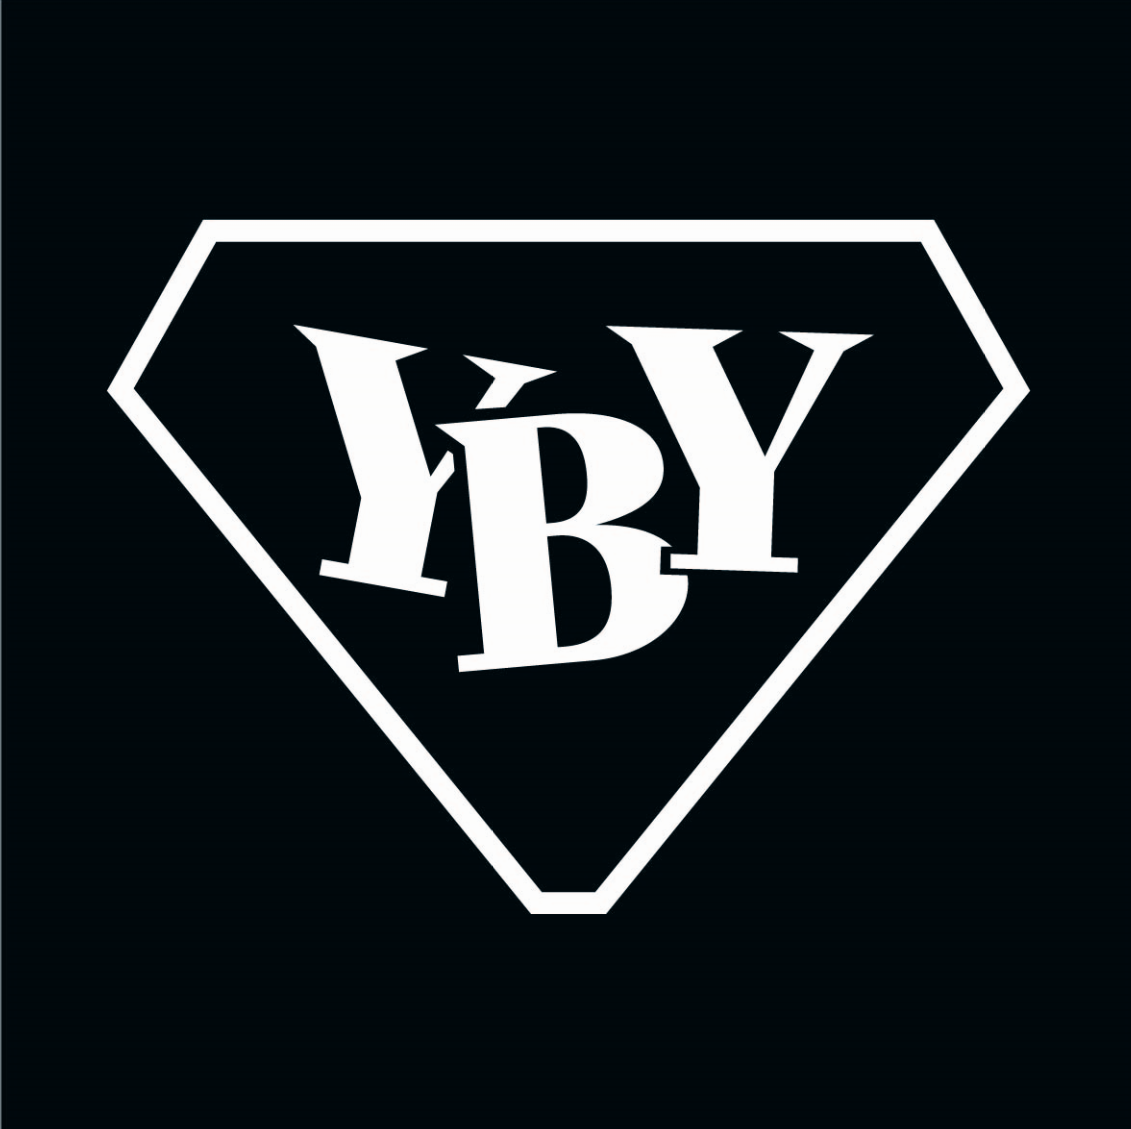 YBY Premium Brands